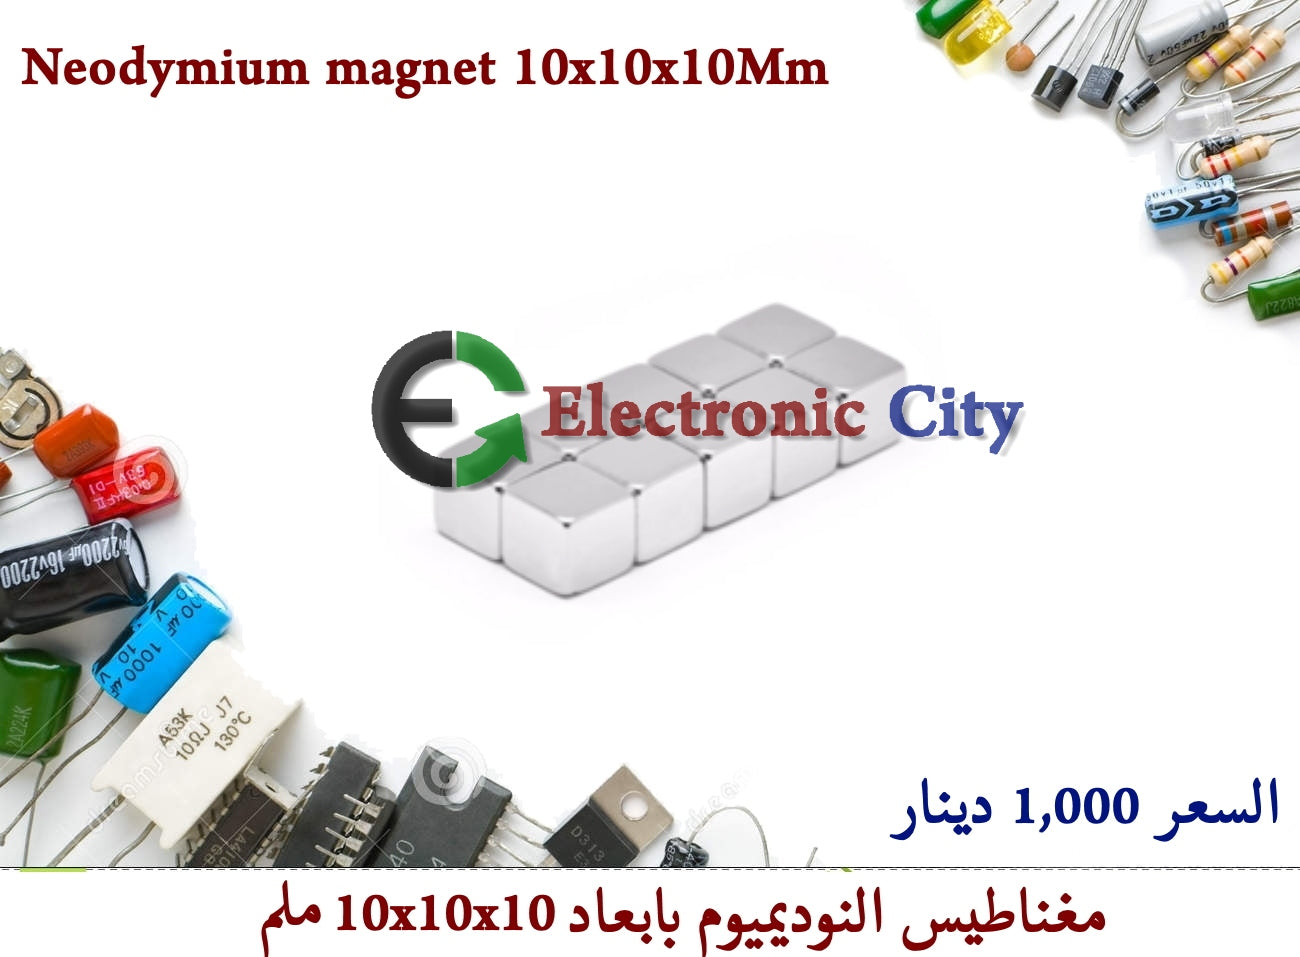 Neodymium magnet 10x10x10Mm #F8. 011236